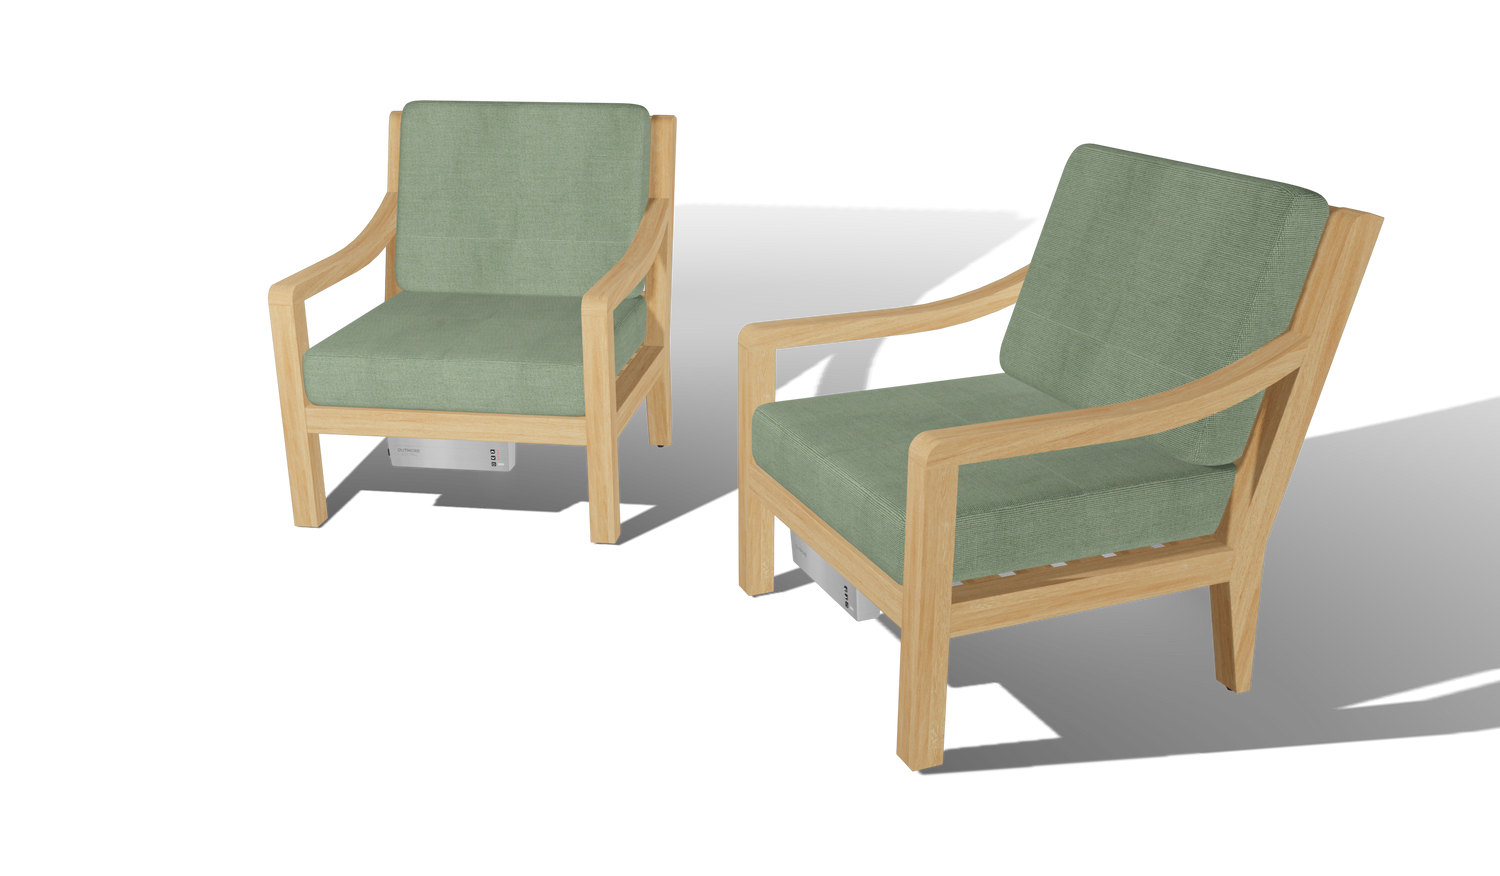 Heated Outdoor Teak Lounge Chair Set 